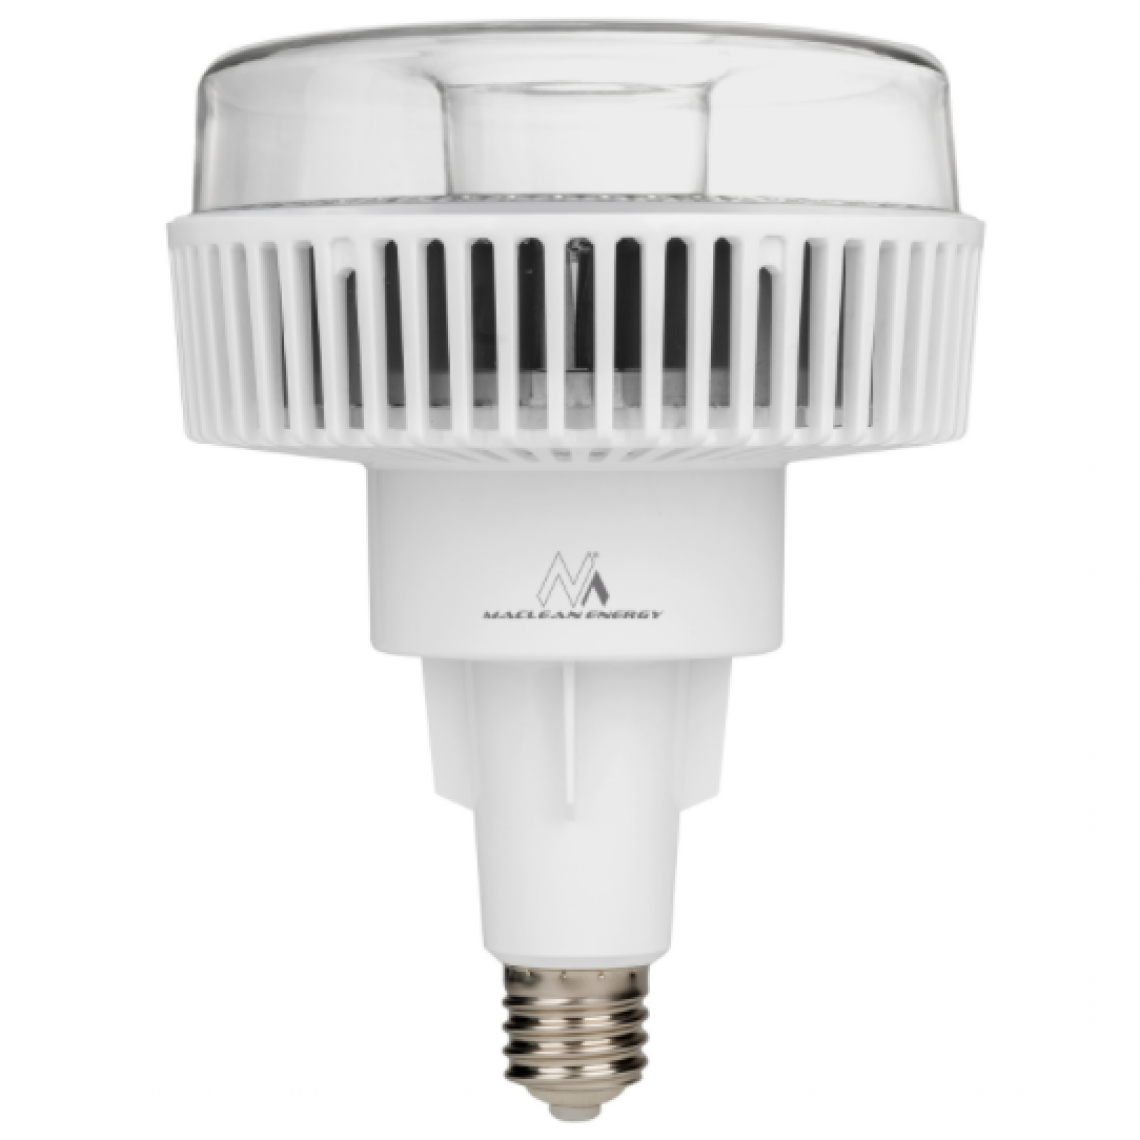 Maclean - Ampoule LED Maclean E40, 95W, 230V, blanc froid, 6500K, 13000lm, MCE305 CW - Ampoules LED